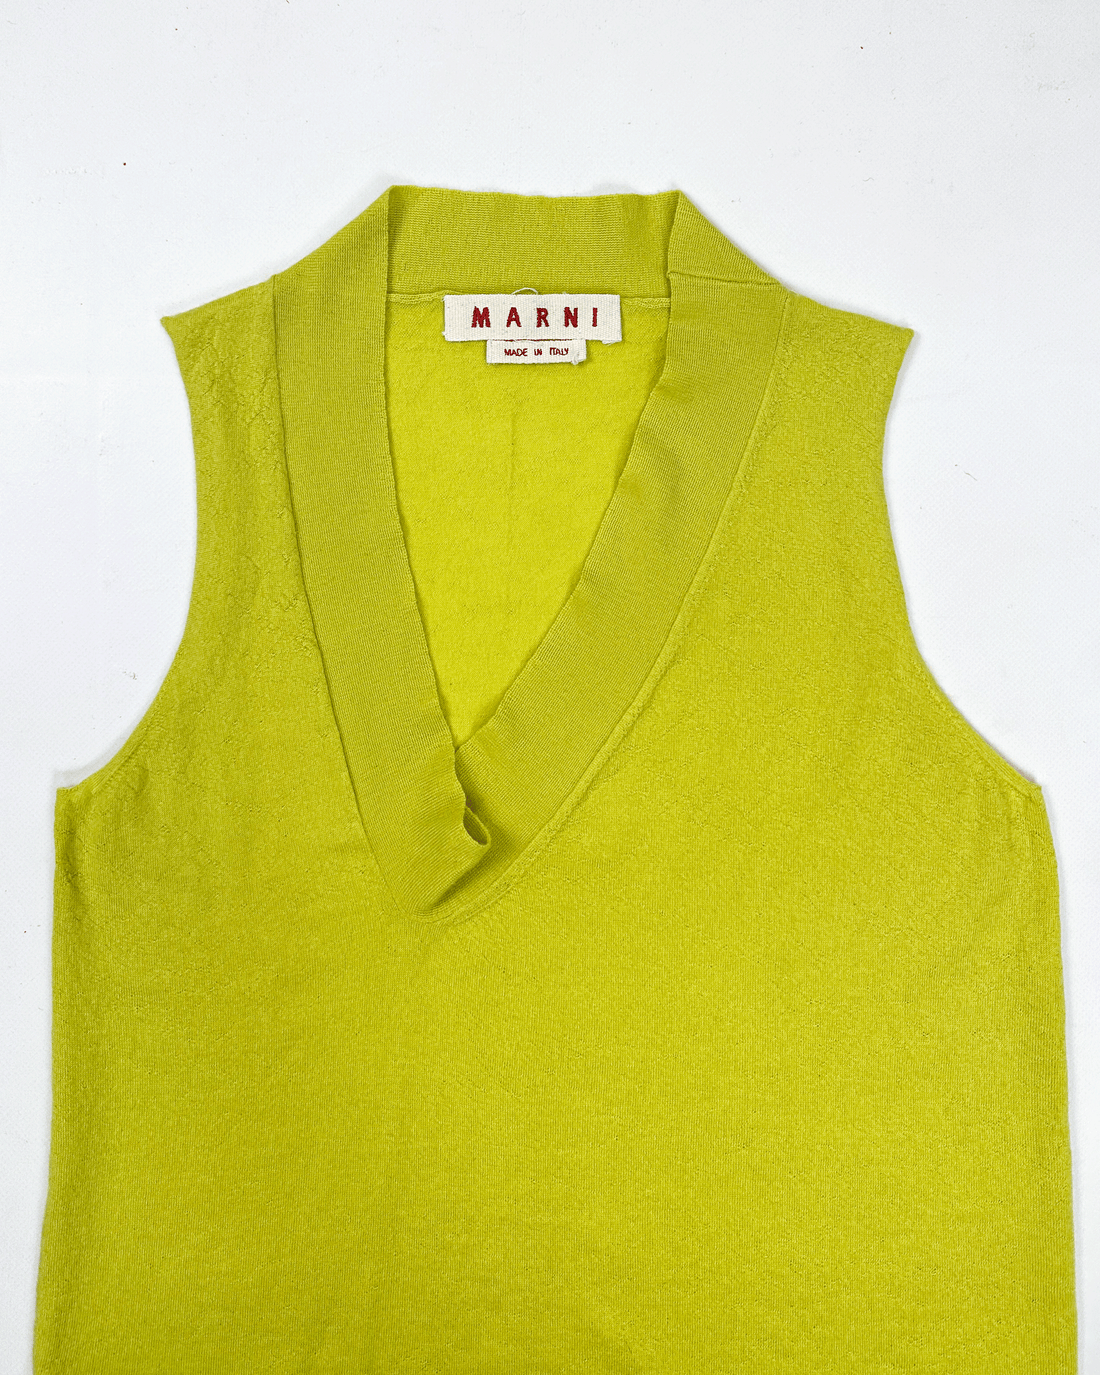 Marni Lime Green Cachemire Vest 2000's